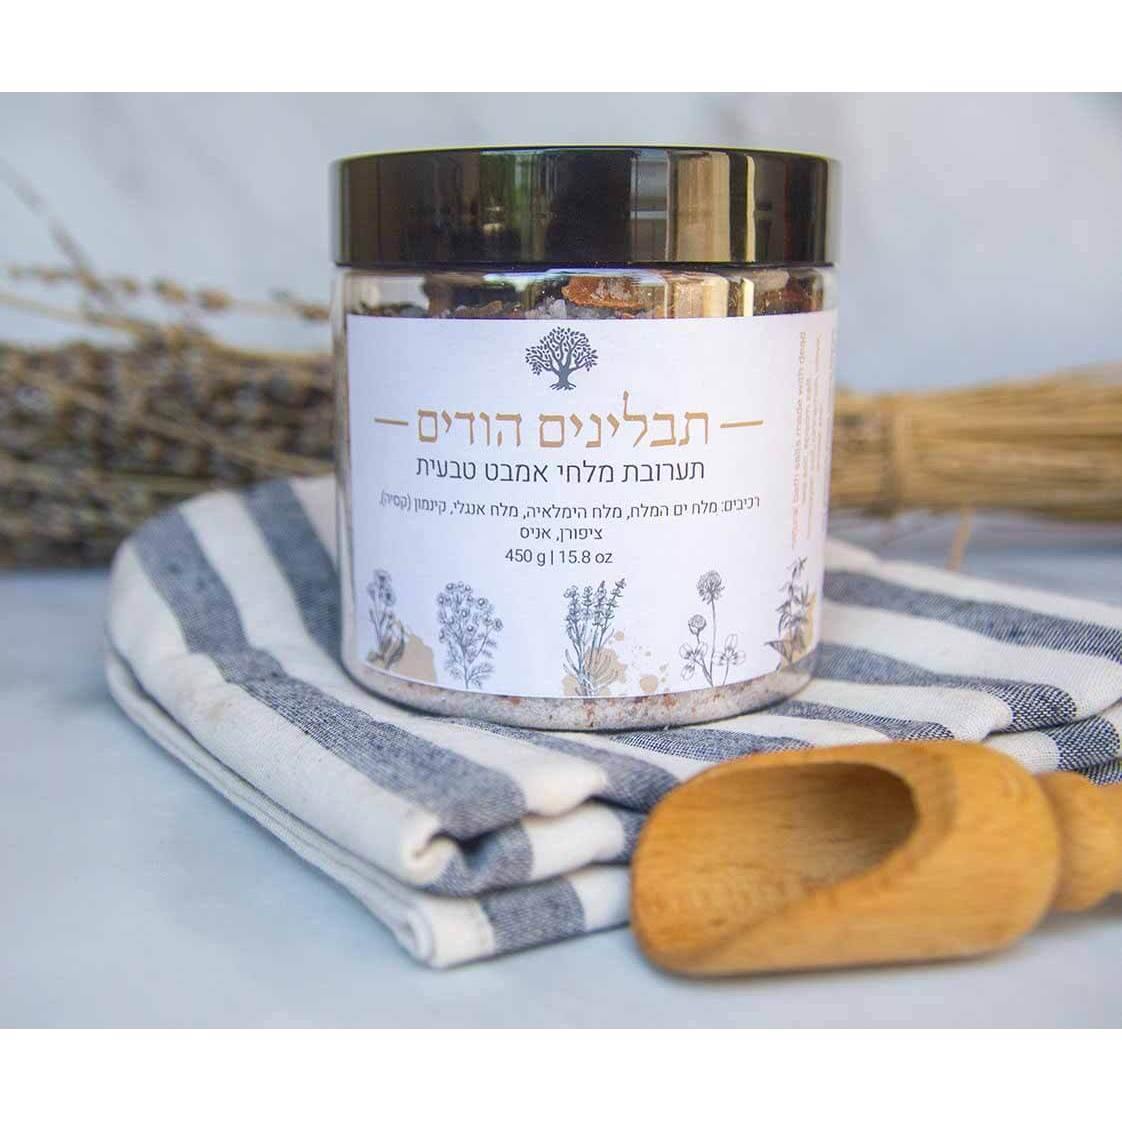 Aromatherapy bath salt "Indian spices" - Tree of Life - Israel Menu